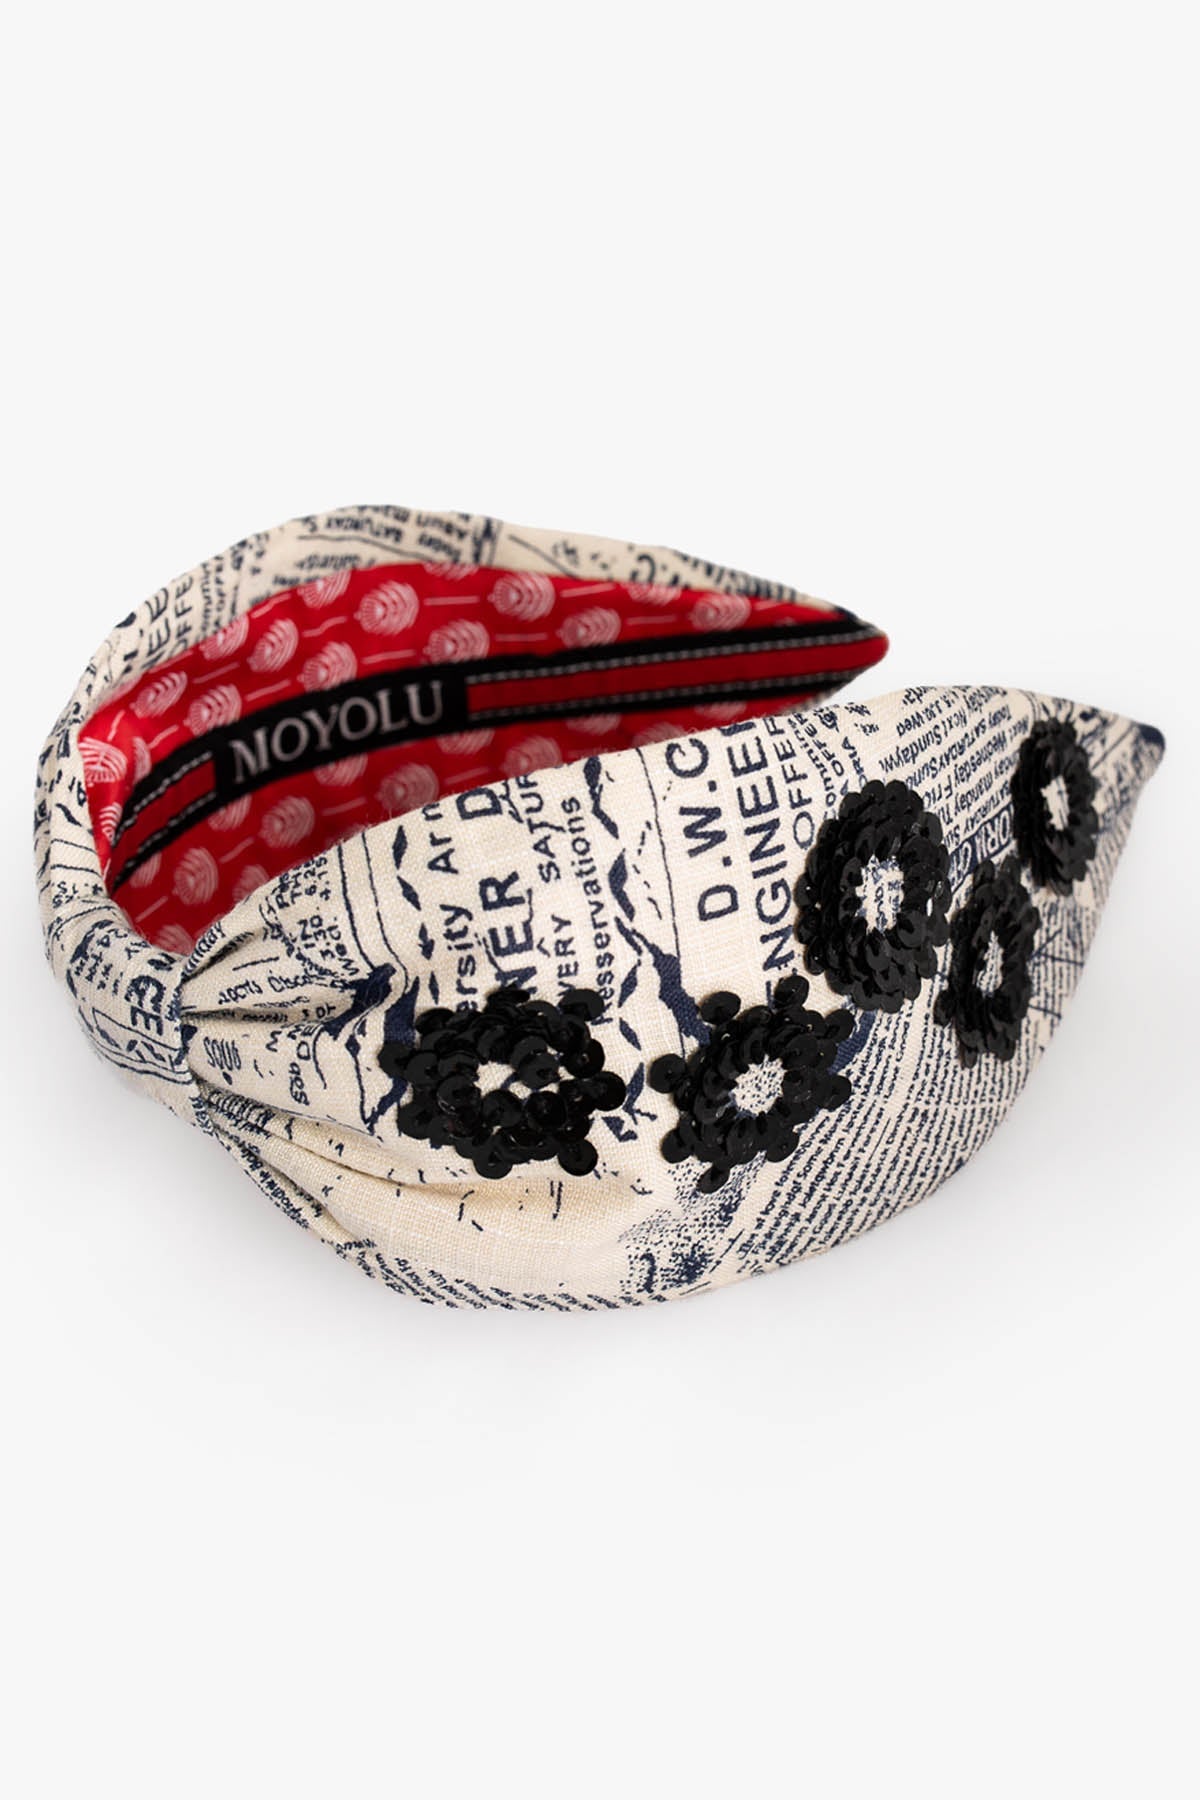 Moyolu Black Canvas Printed Headband Accessories online at ScrollnShops